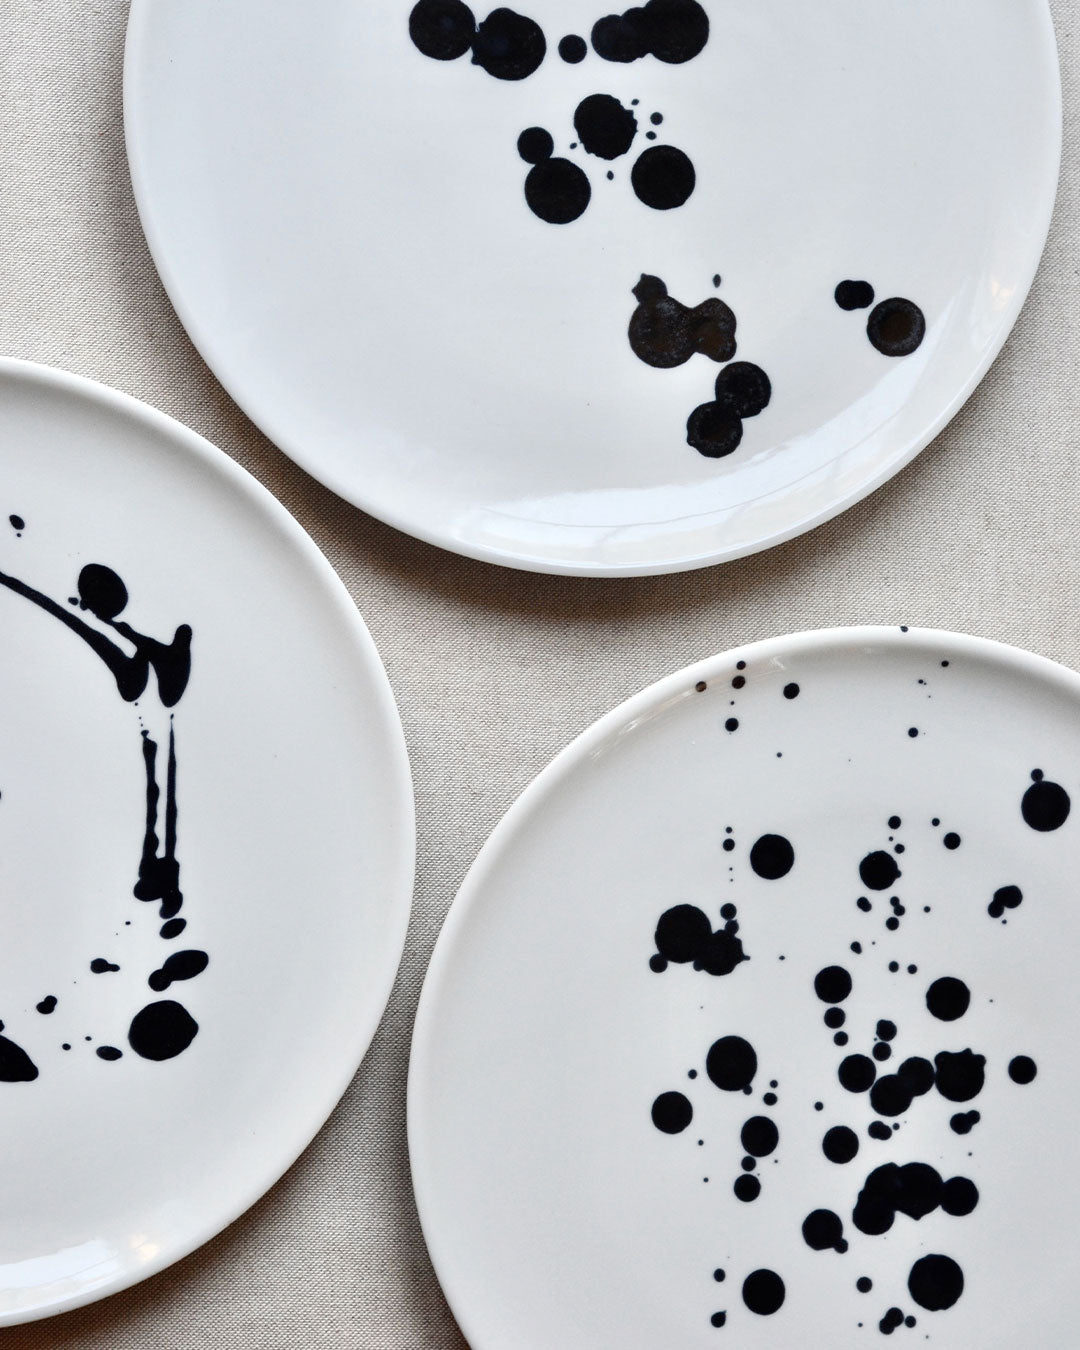 Sumi-e Ink blot porcelain plates tableware Maia Ming Designs